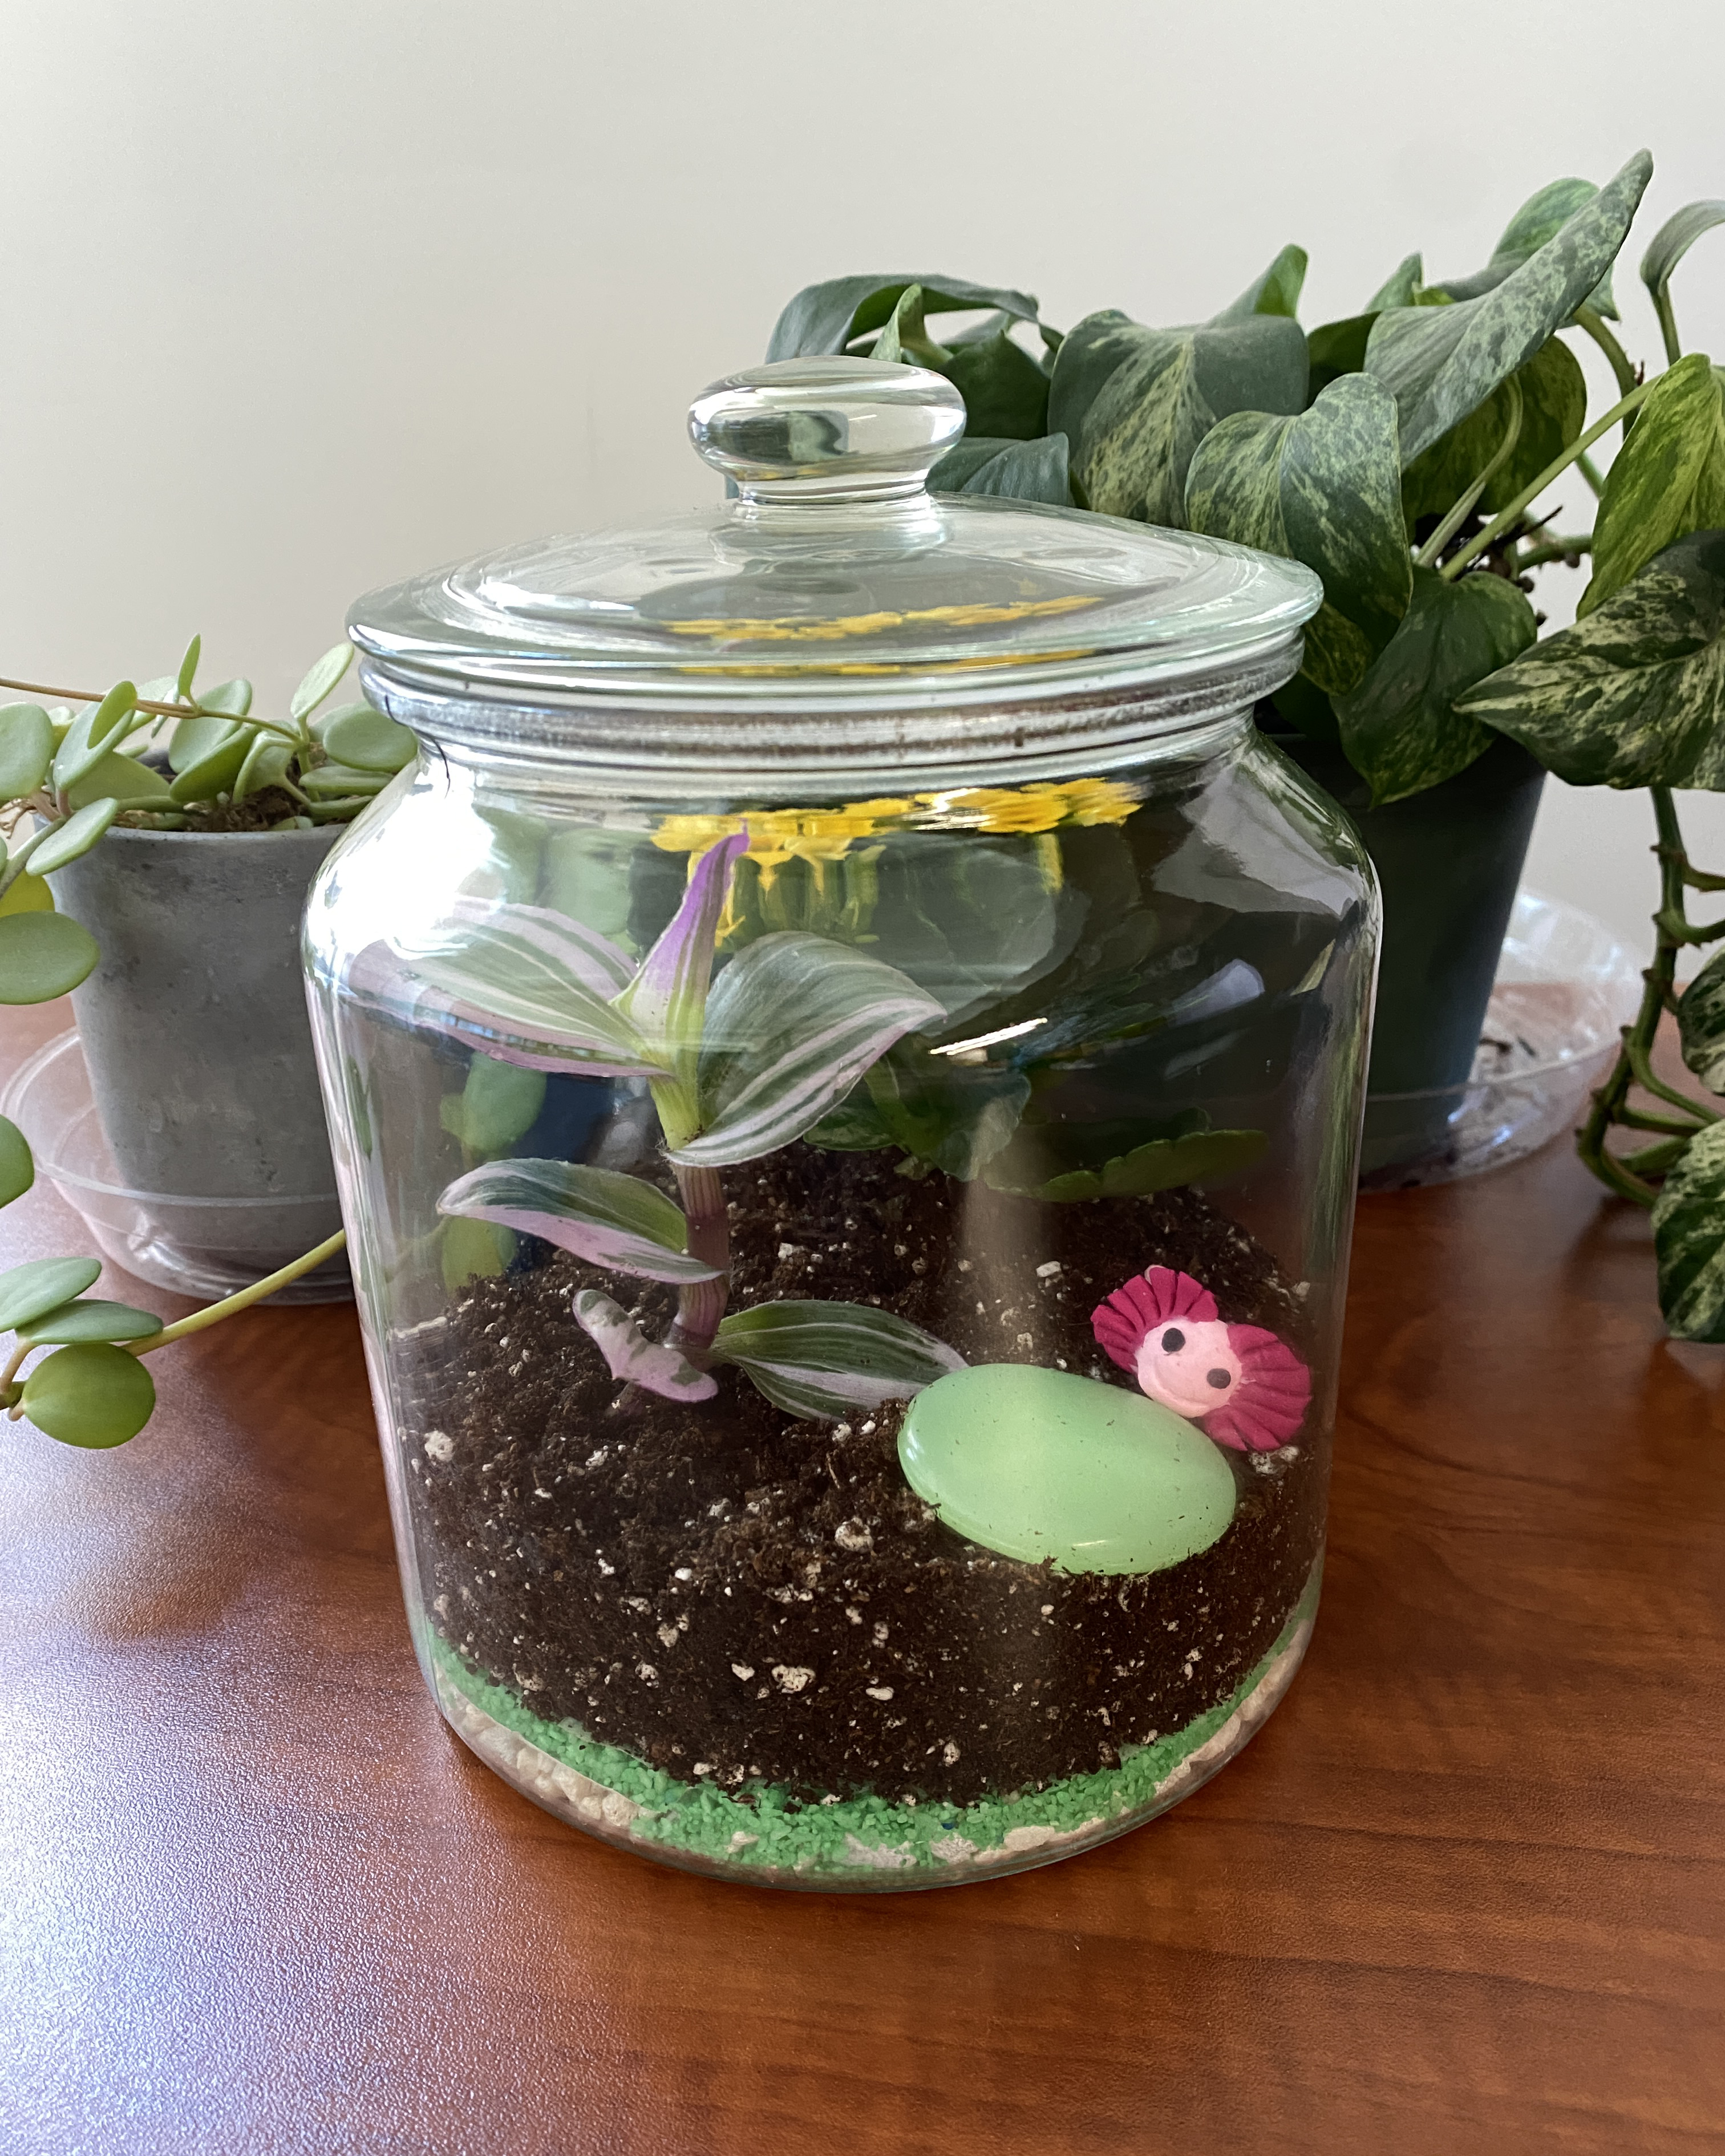 Simple terrarium in a glass jar featuring a small toy axolotl